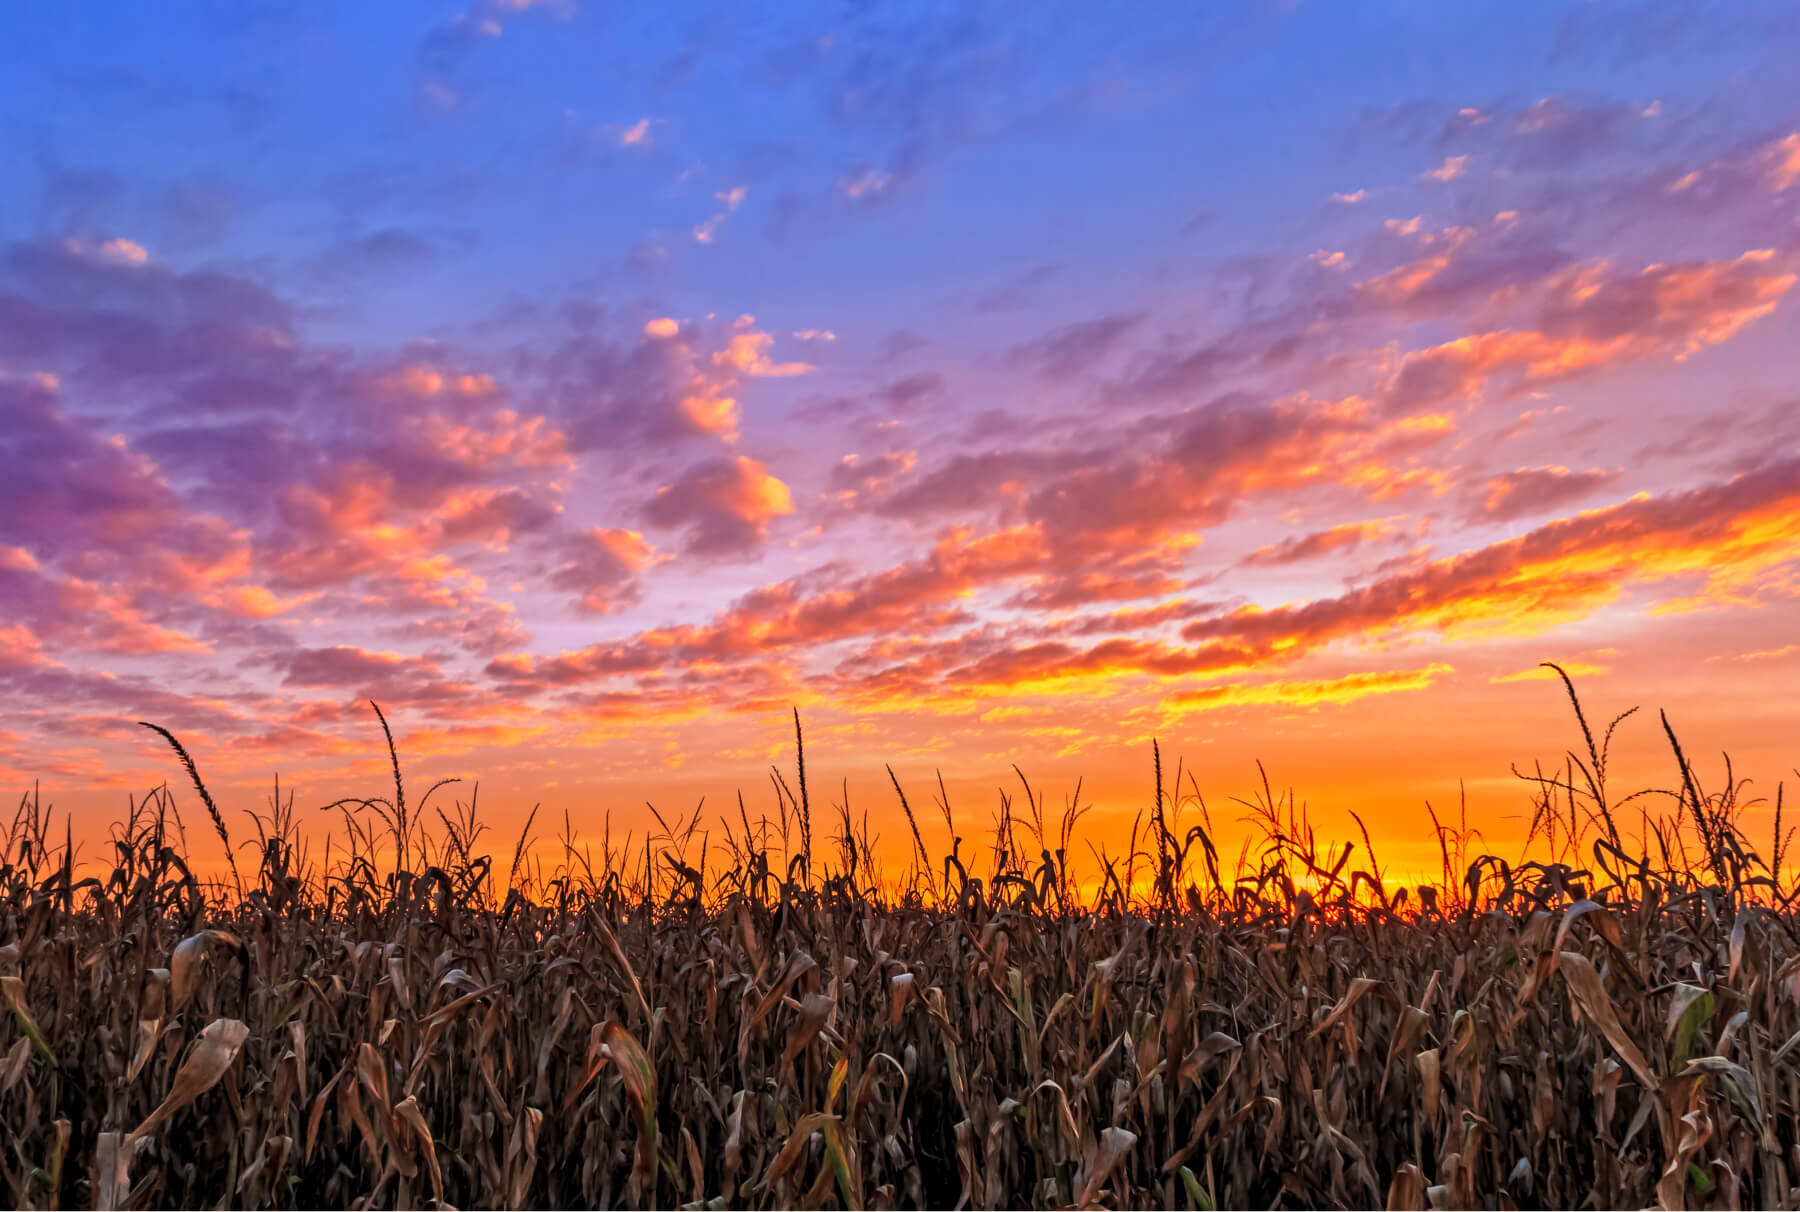 Beautiful sunrise over cornfield with brown corn stalks